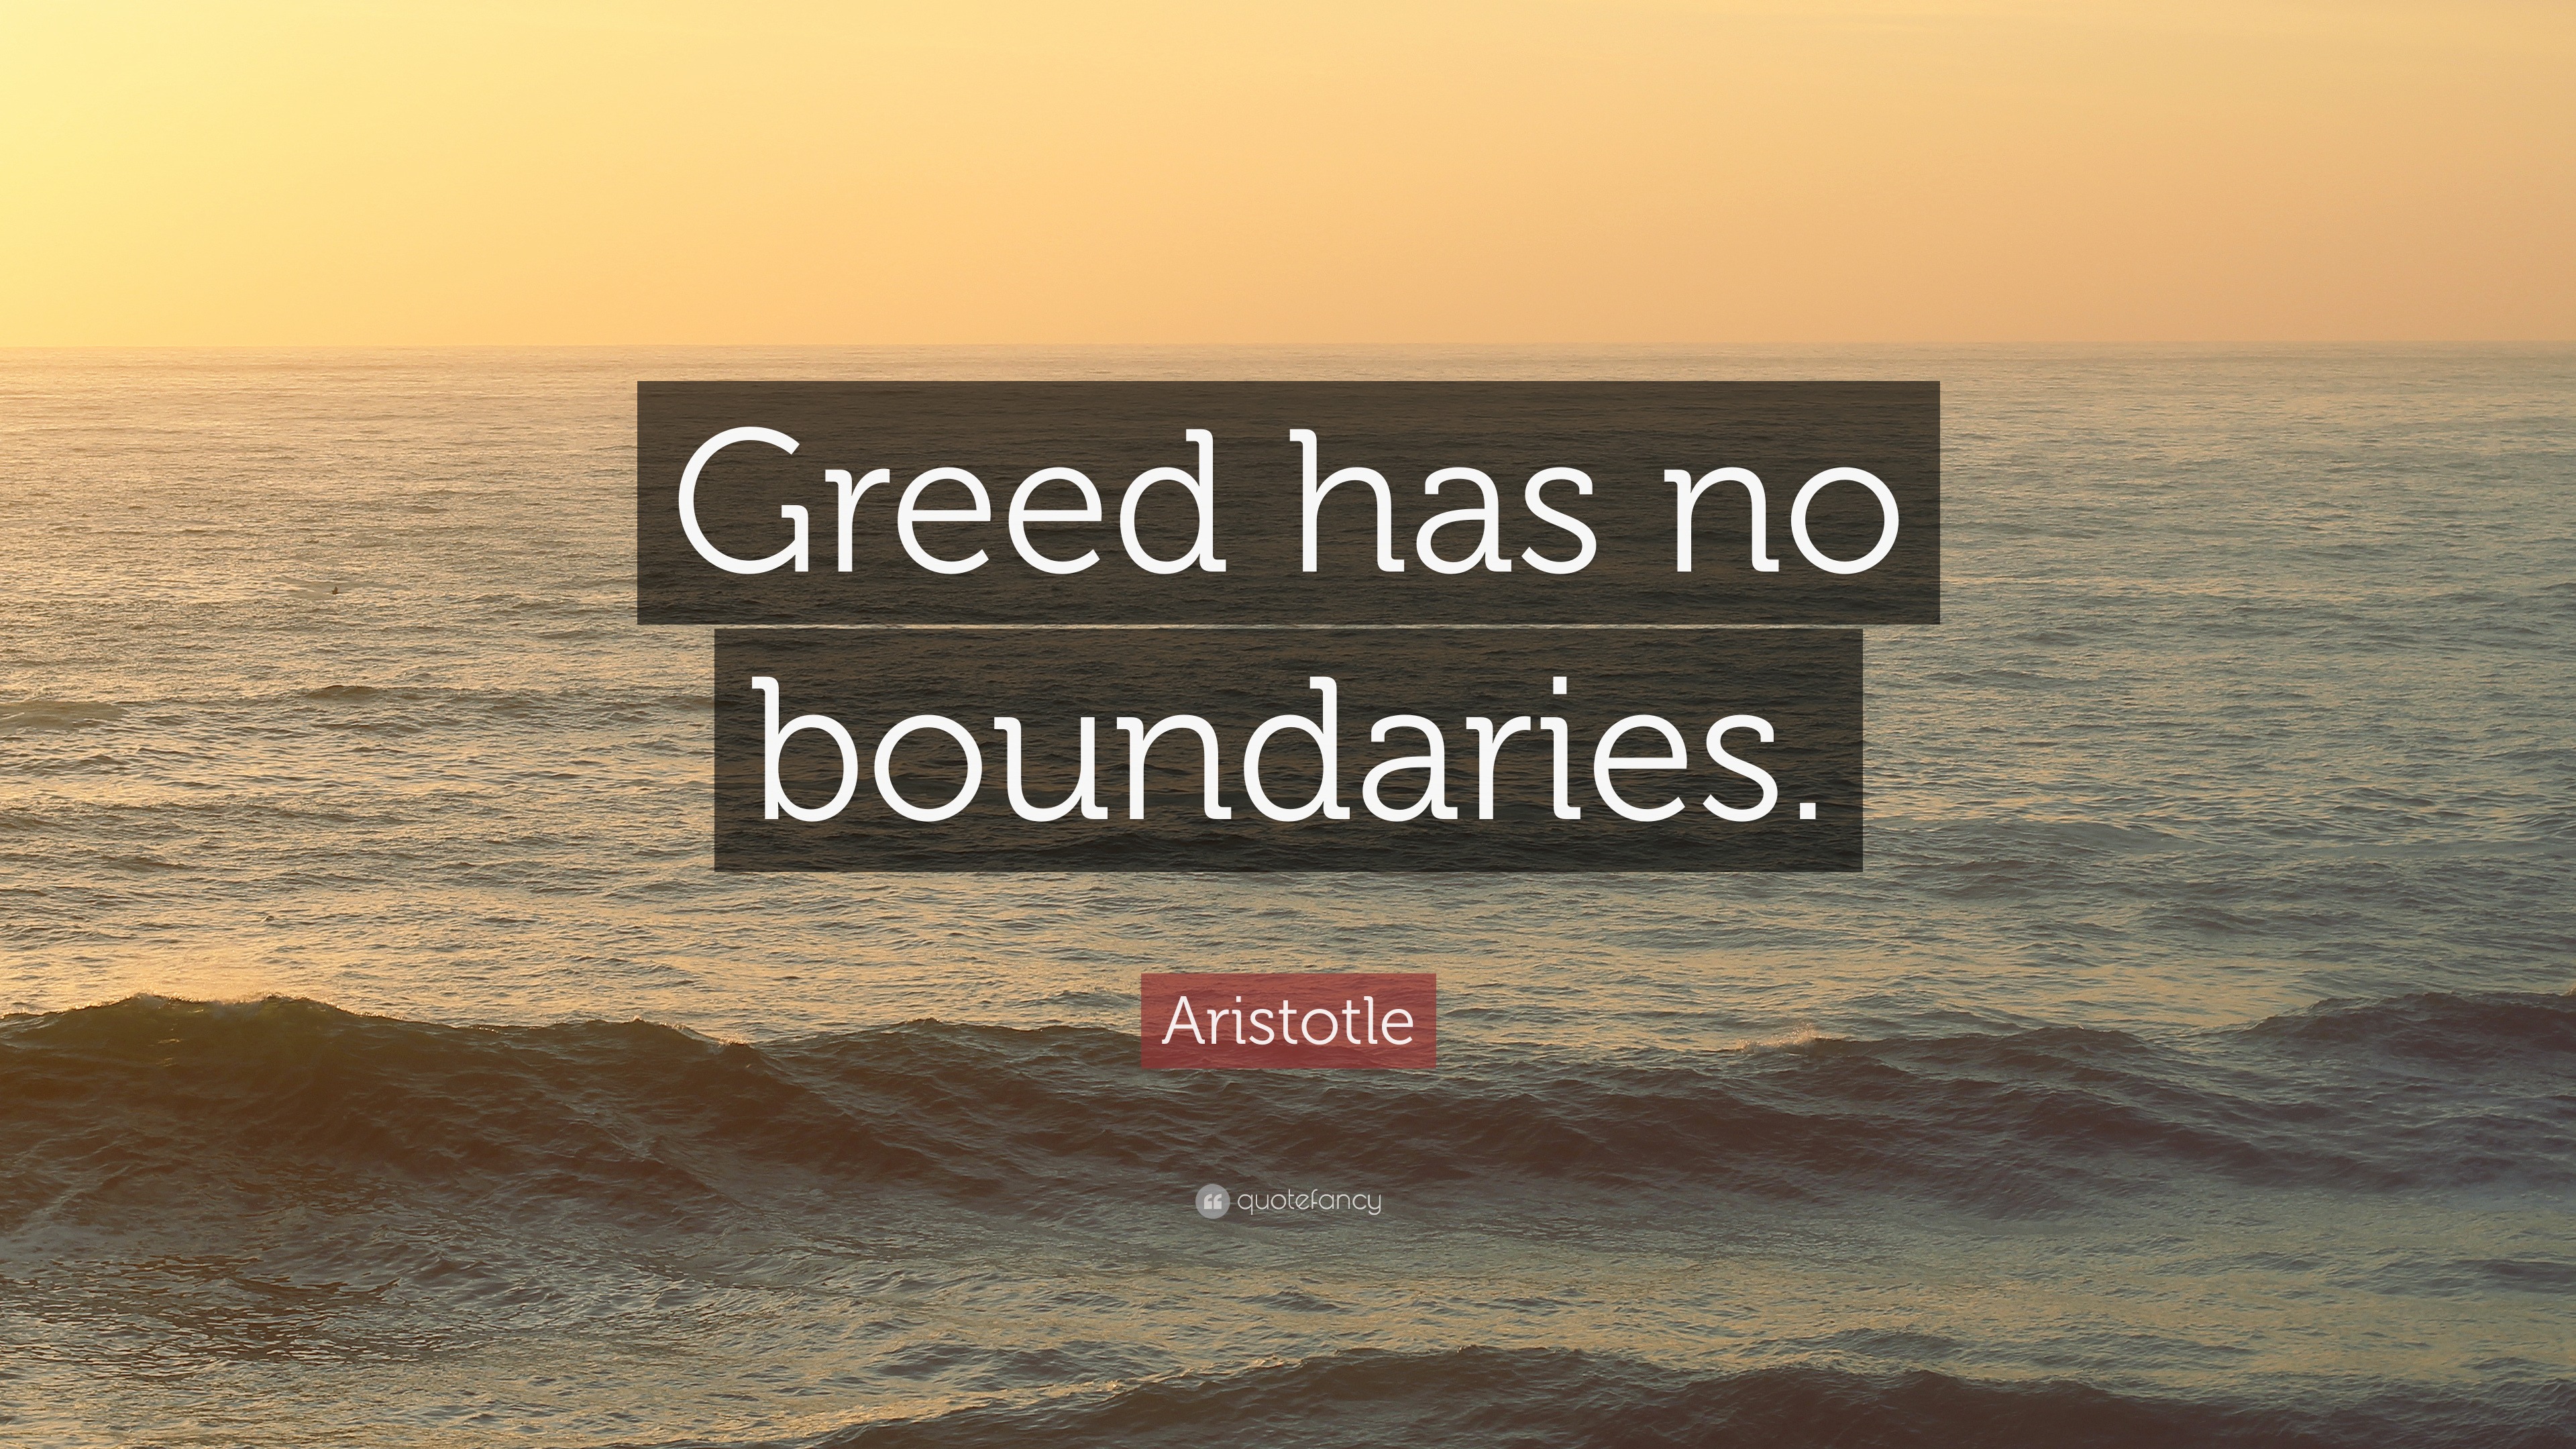 Aristotle Quote: “Greed has no boundaries.”